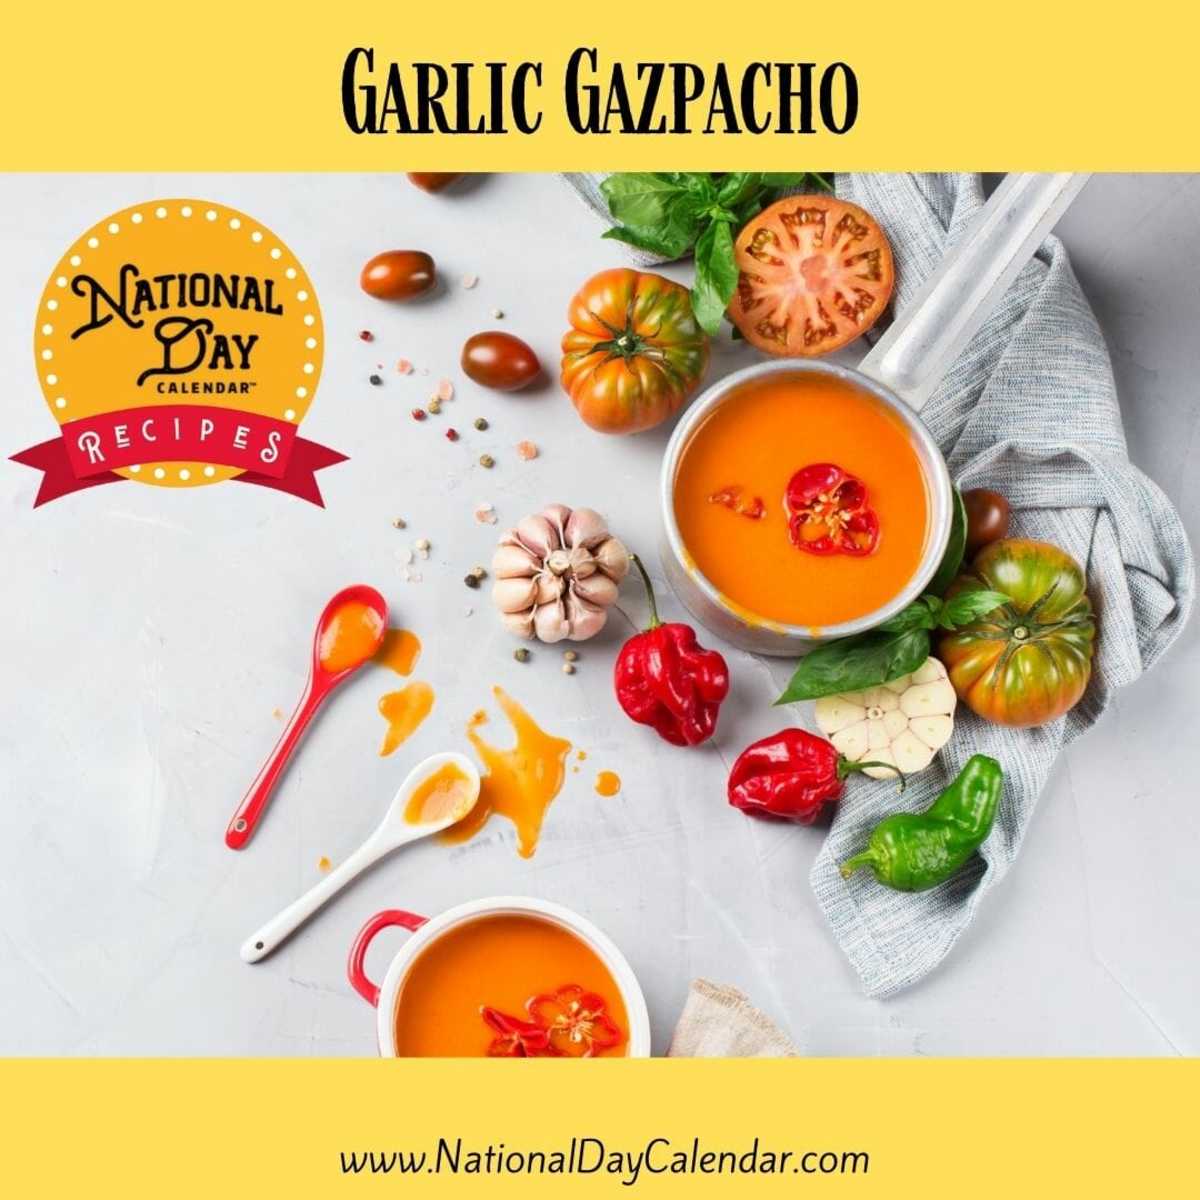 Garlic Gazpacho